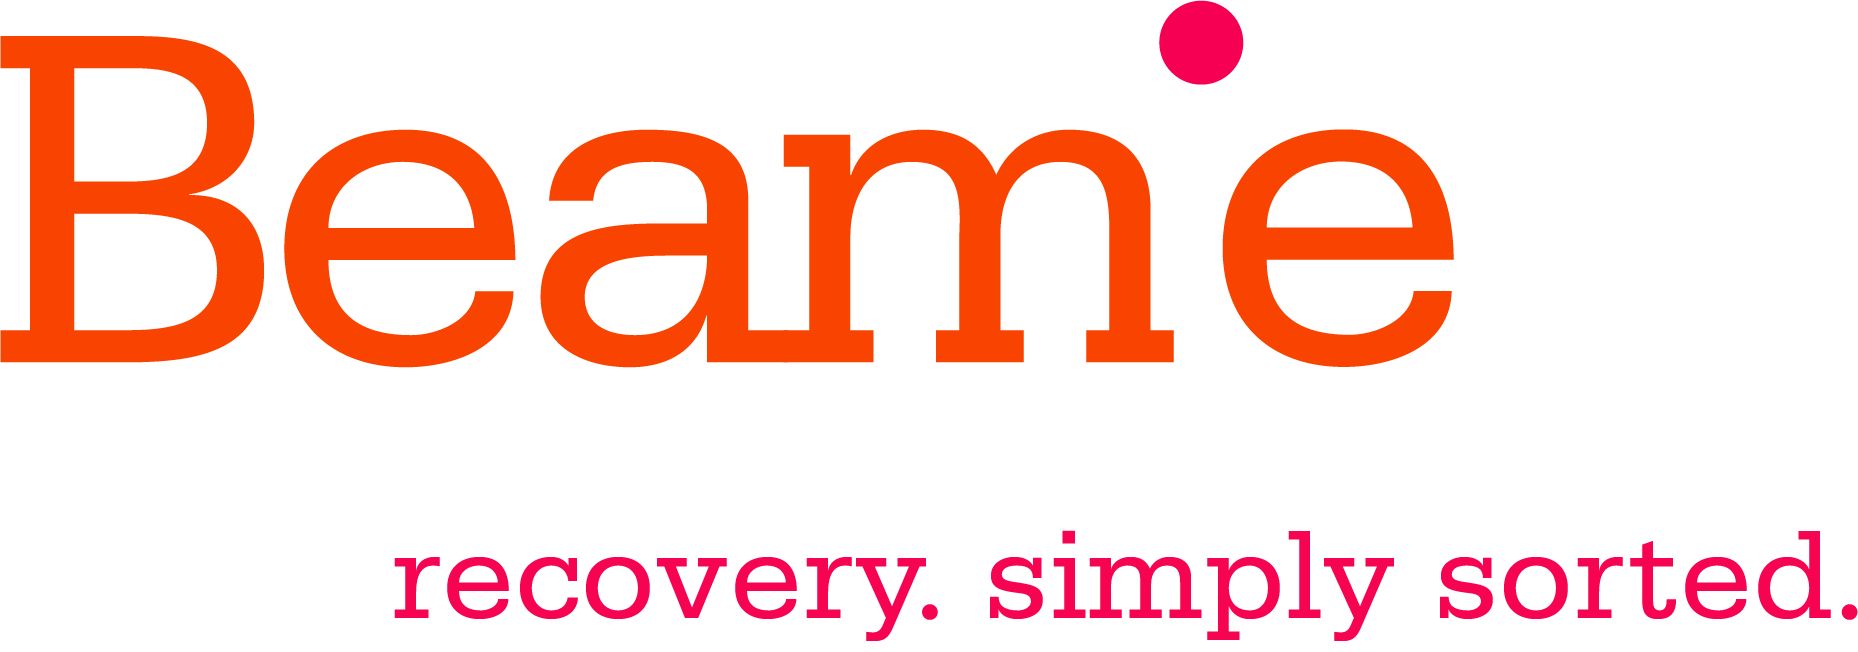 Beame logo with tagline